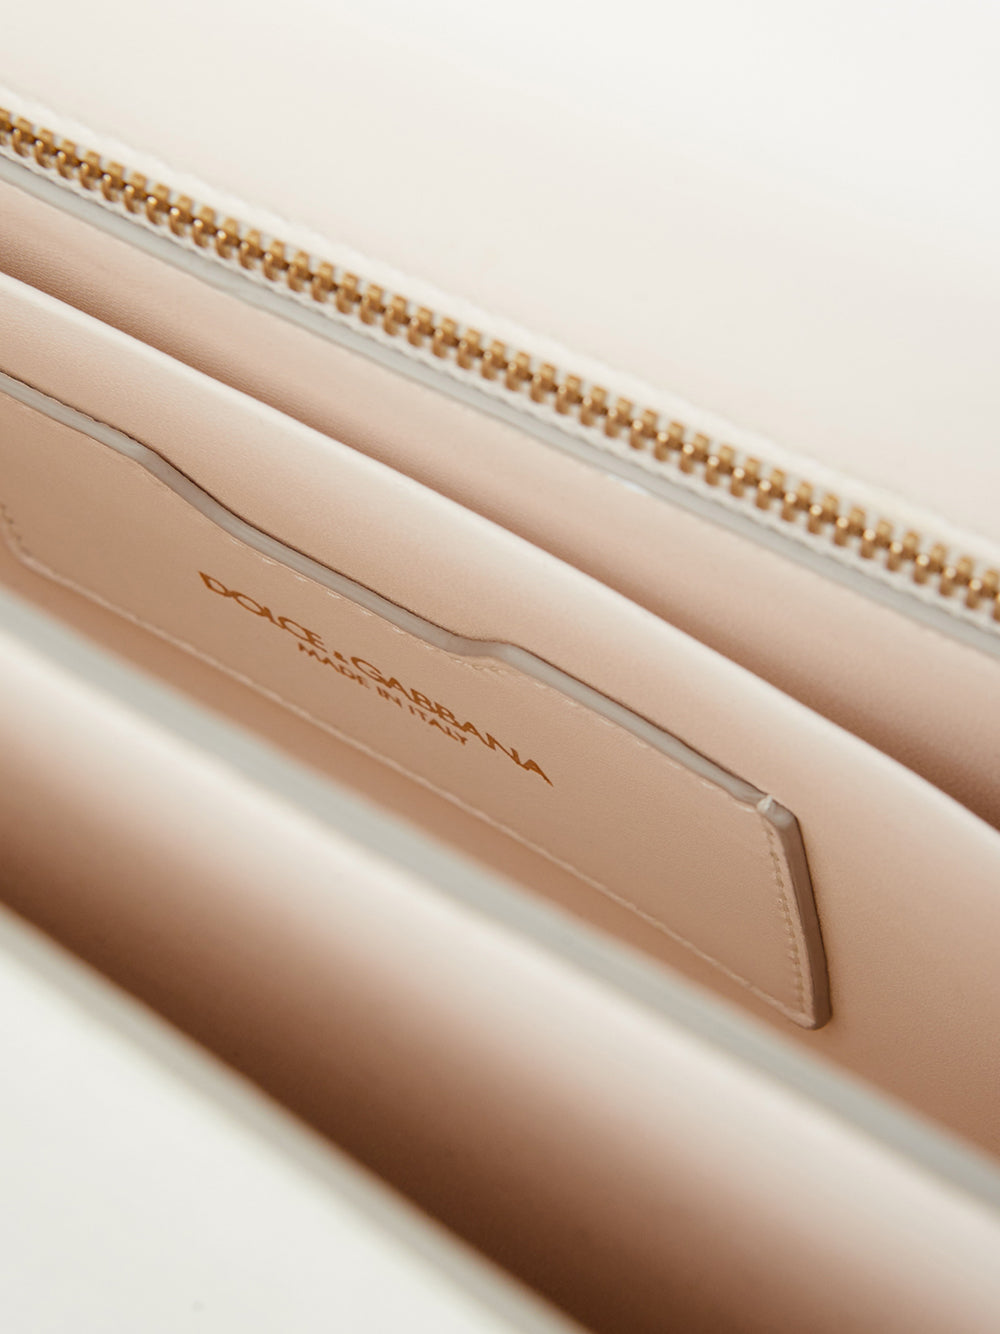 Dolce & Gabbana White Leather Shoulder Bag with Maxi Logo - DEA STILOSA MILANO